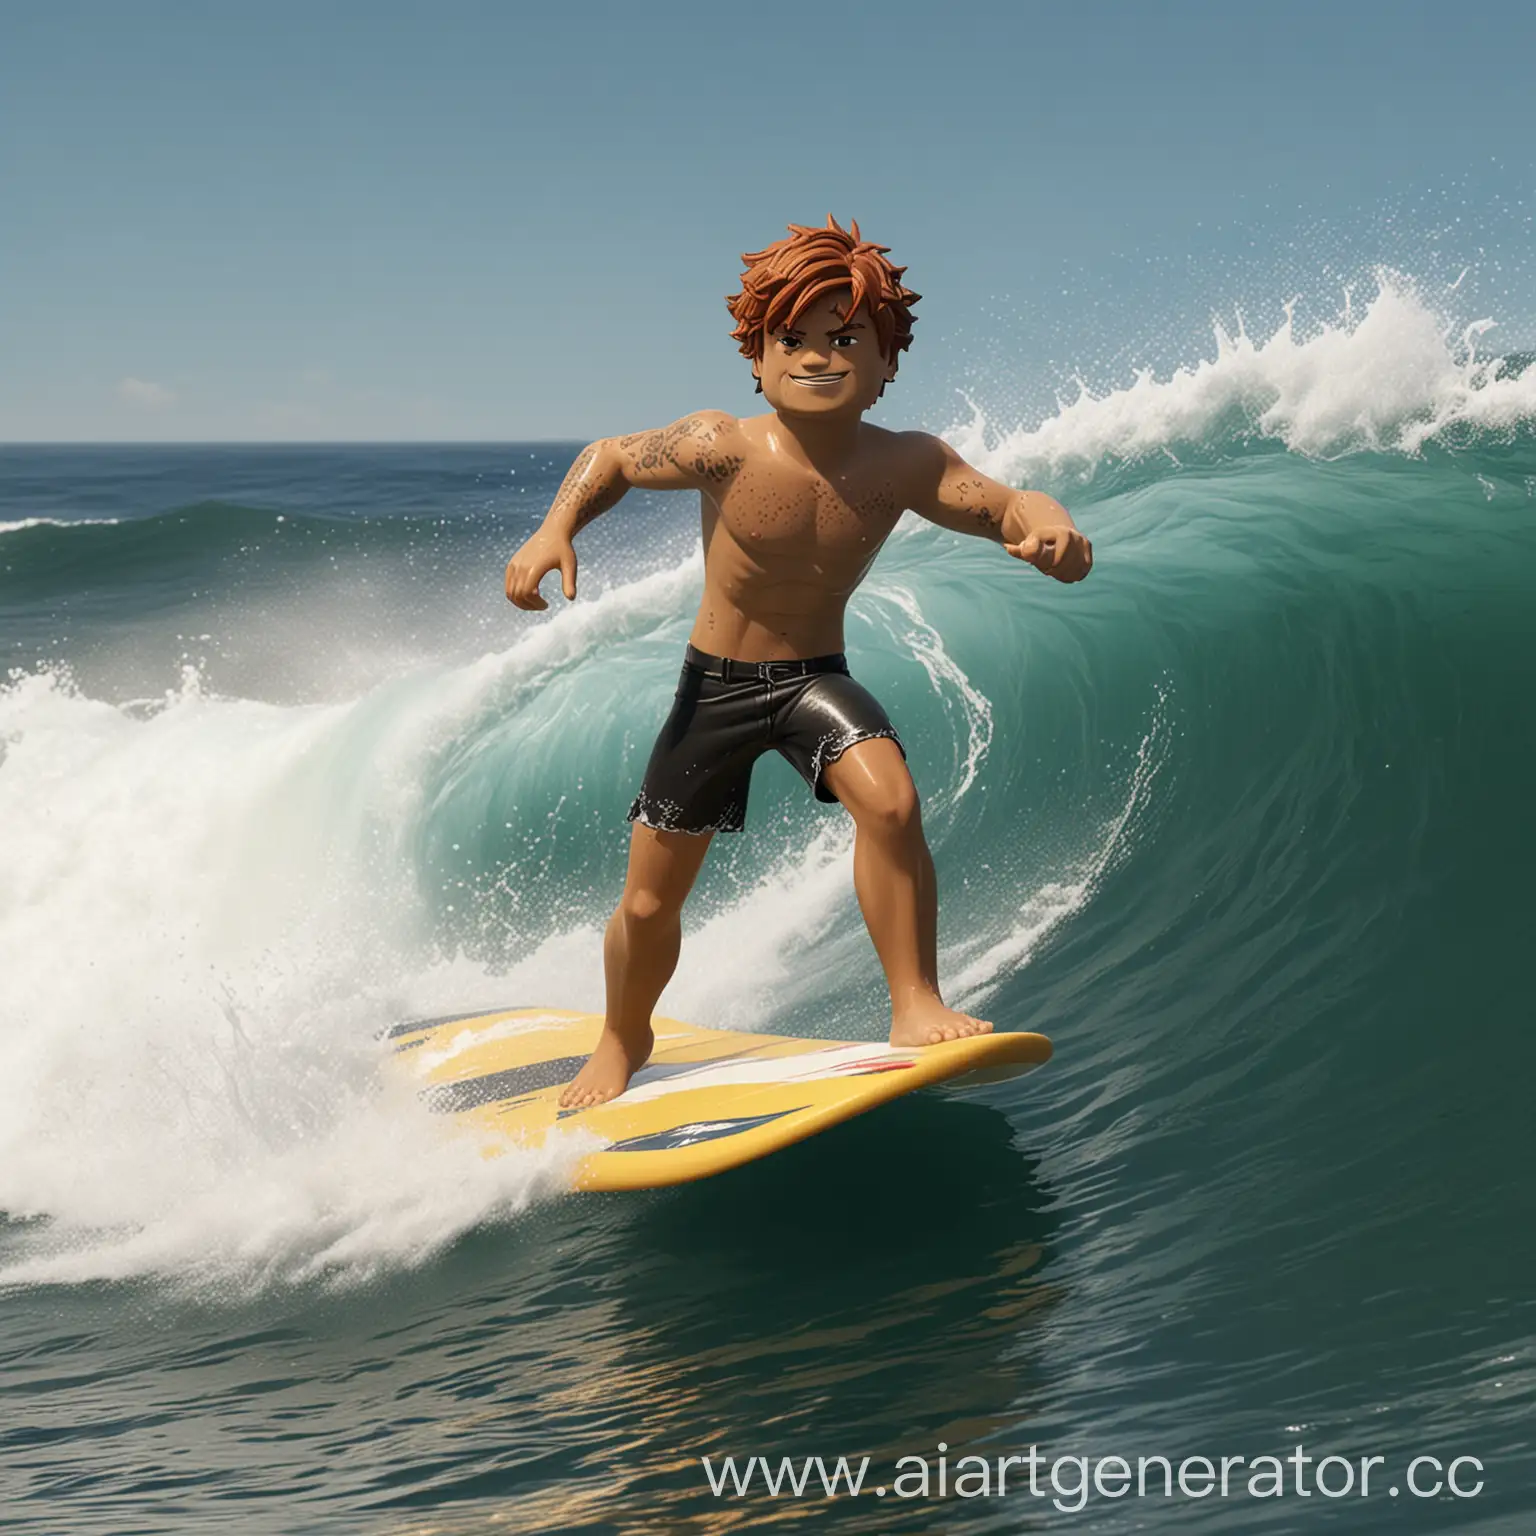 Волна, Роблокс аватар персонаж едет на волне на сёрфинг доске, Раеализм, Roblox Avatar, Roblox Style, Ride the wave roblox guy